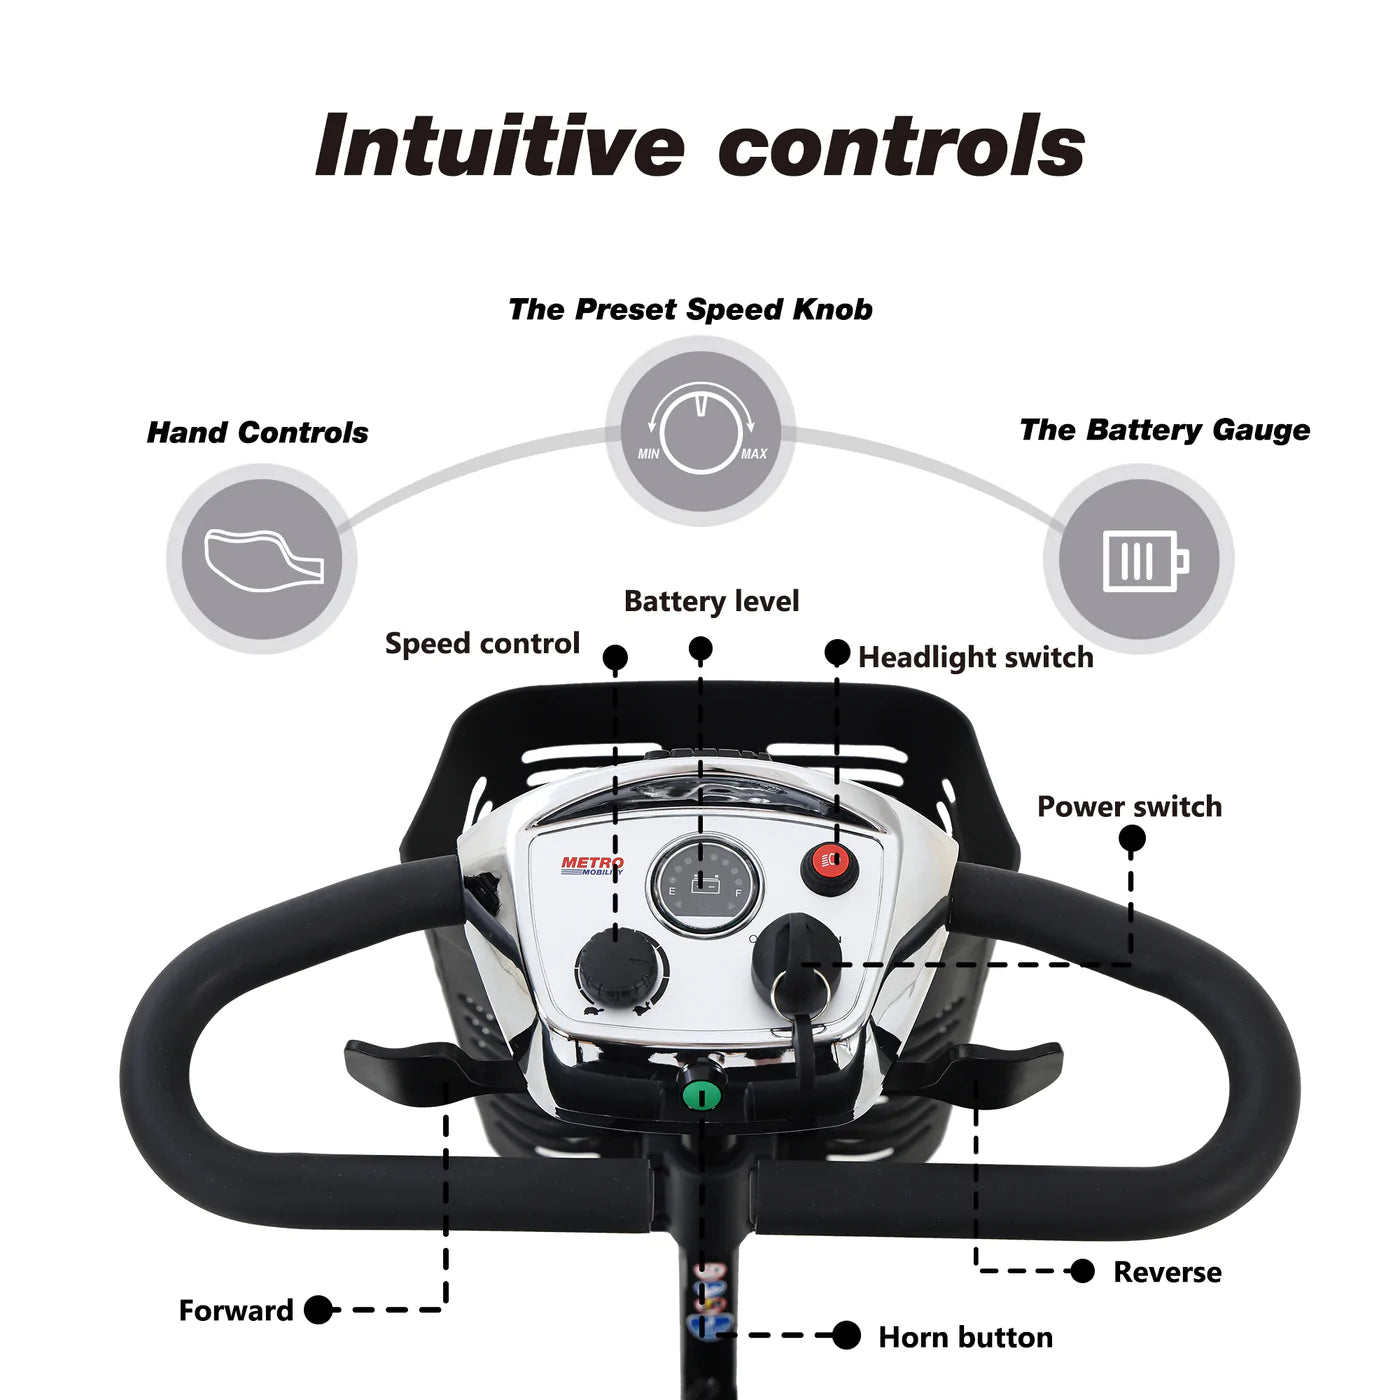 Intuitive Controls